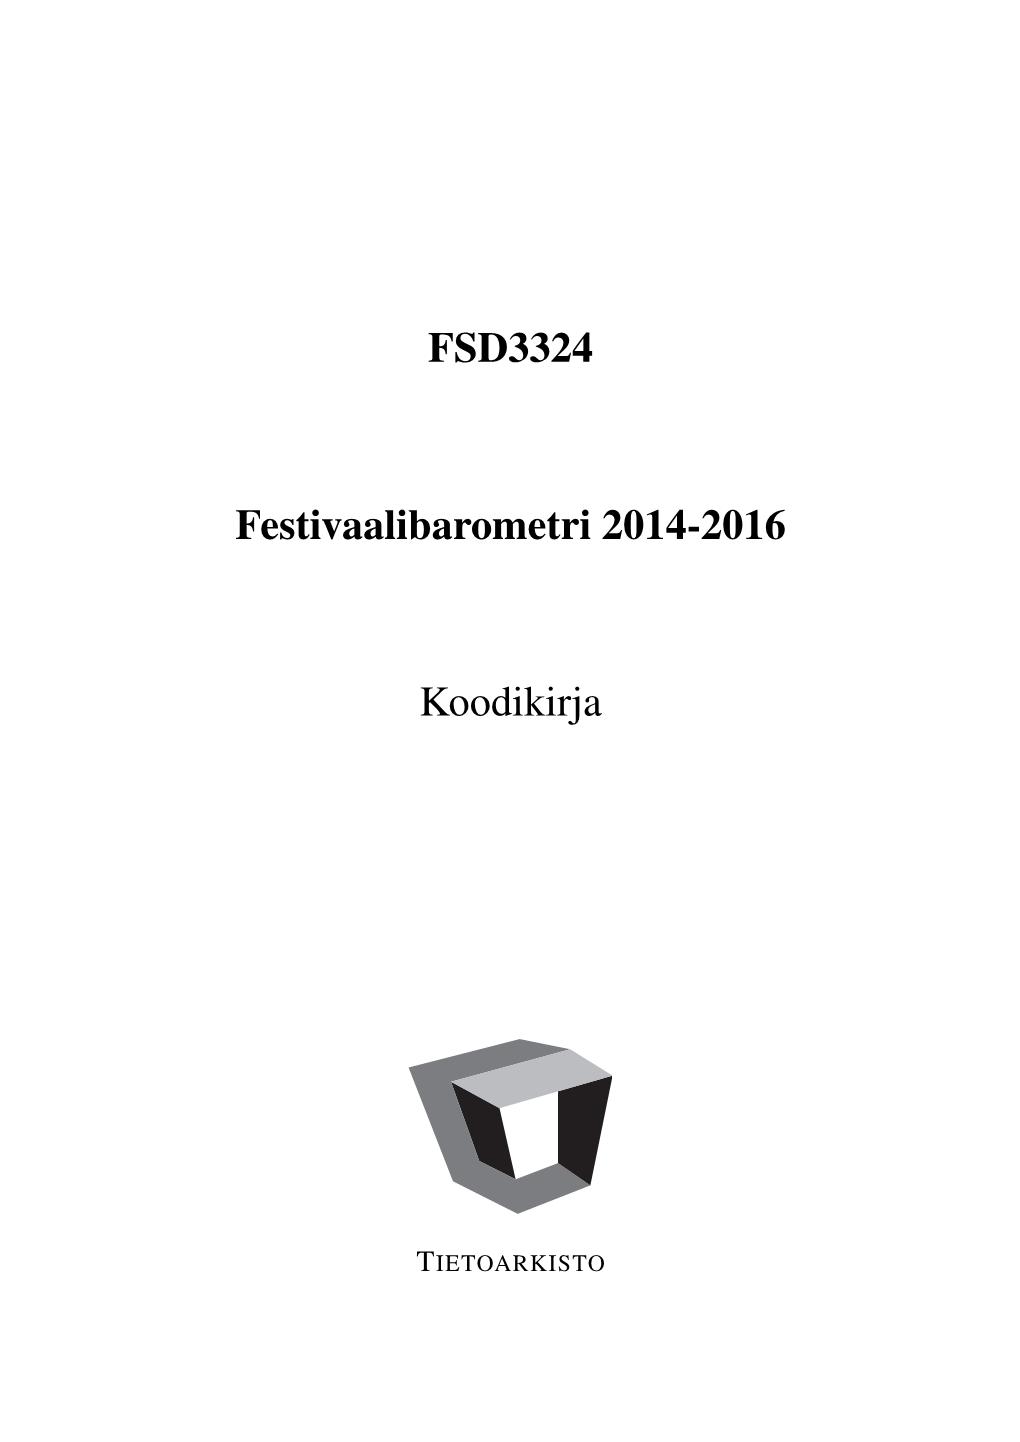 FSD3324 Festivaalibarometri 2014-2016 Koodikirja